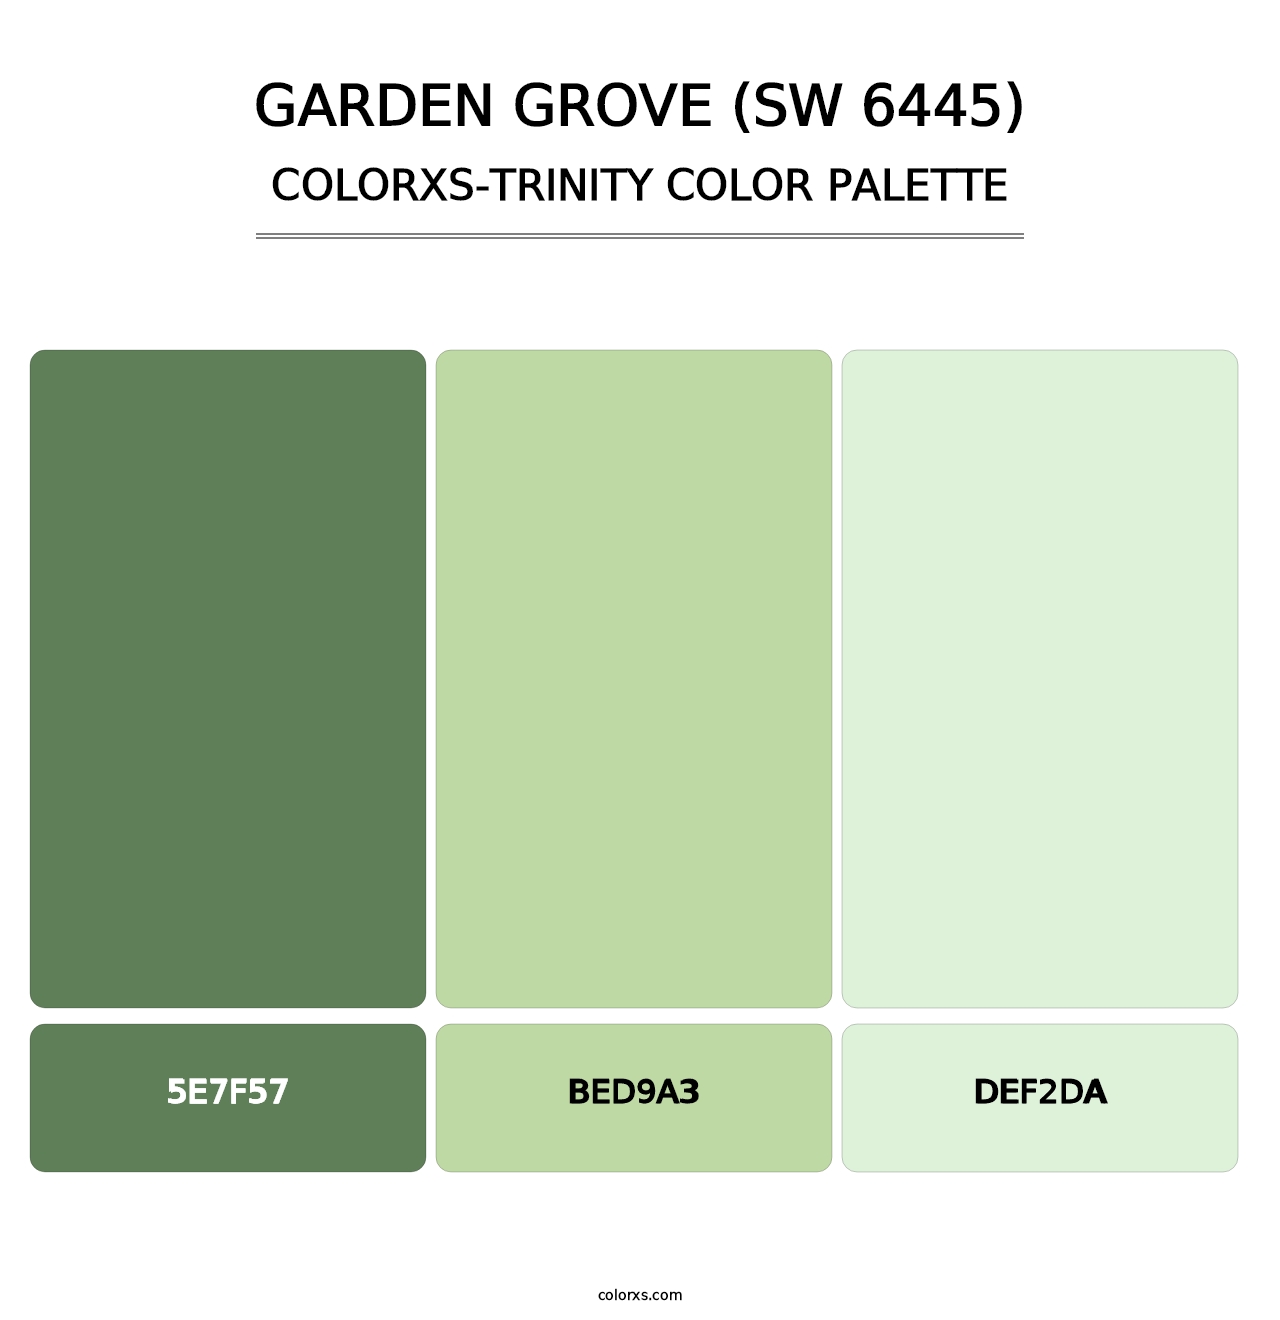 Garden Grove (SW 6445) - Colorxs Trinity Palette